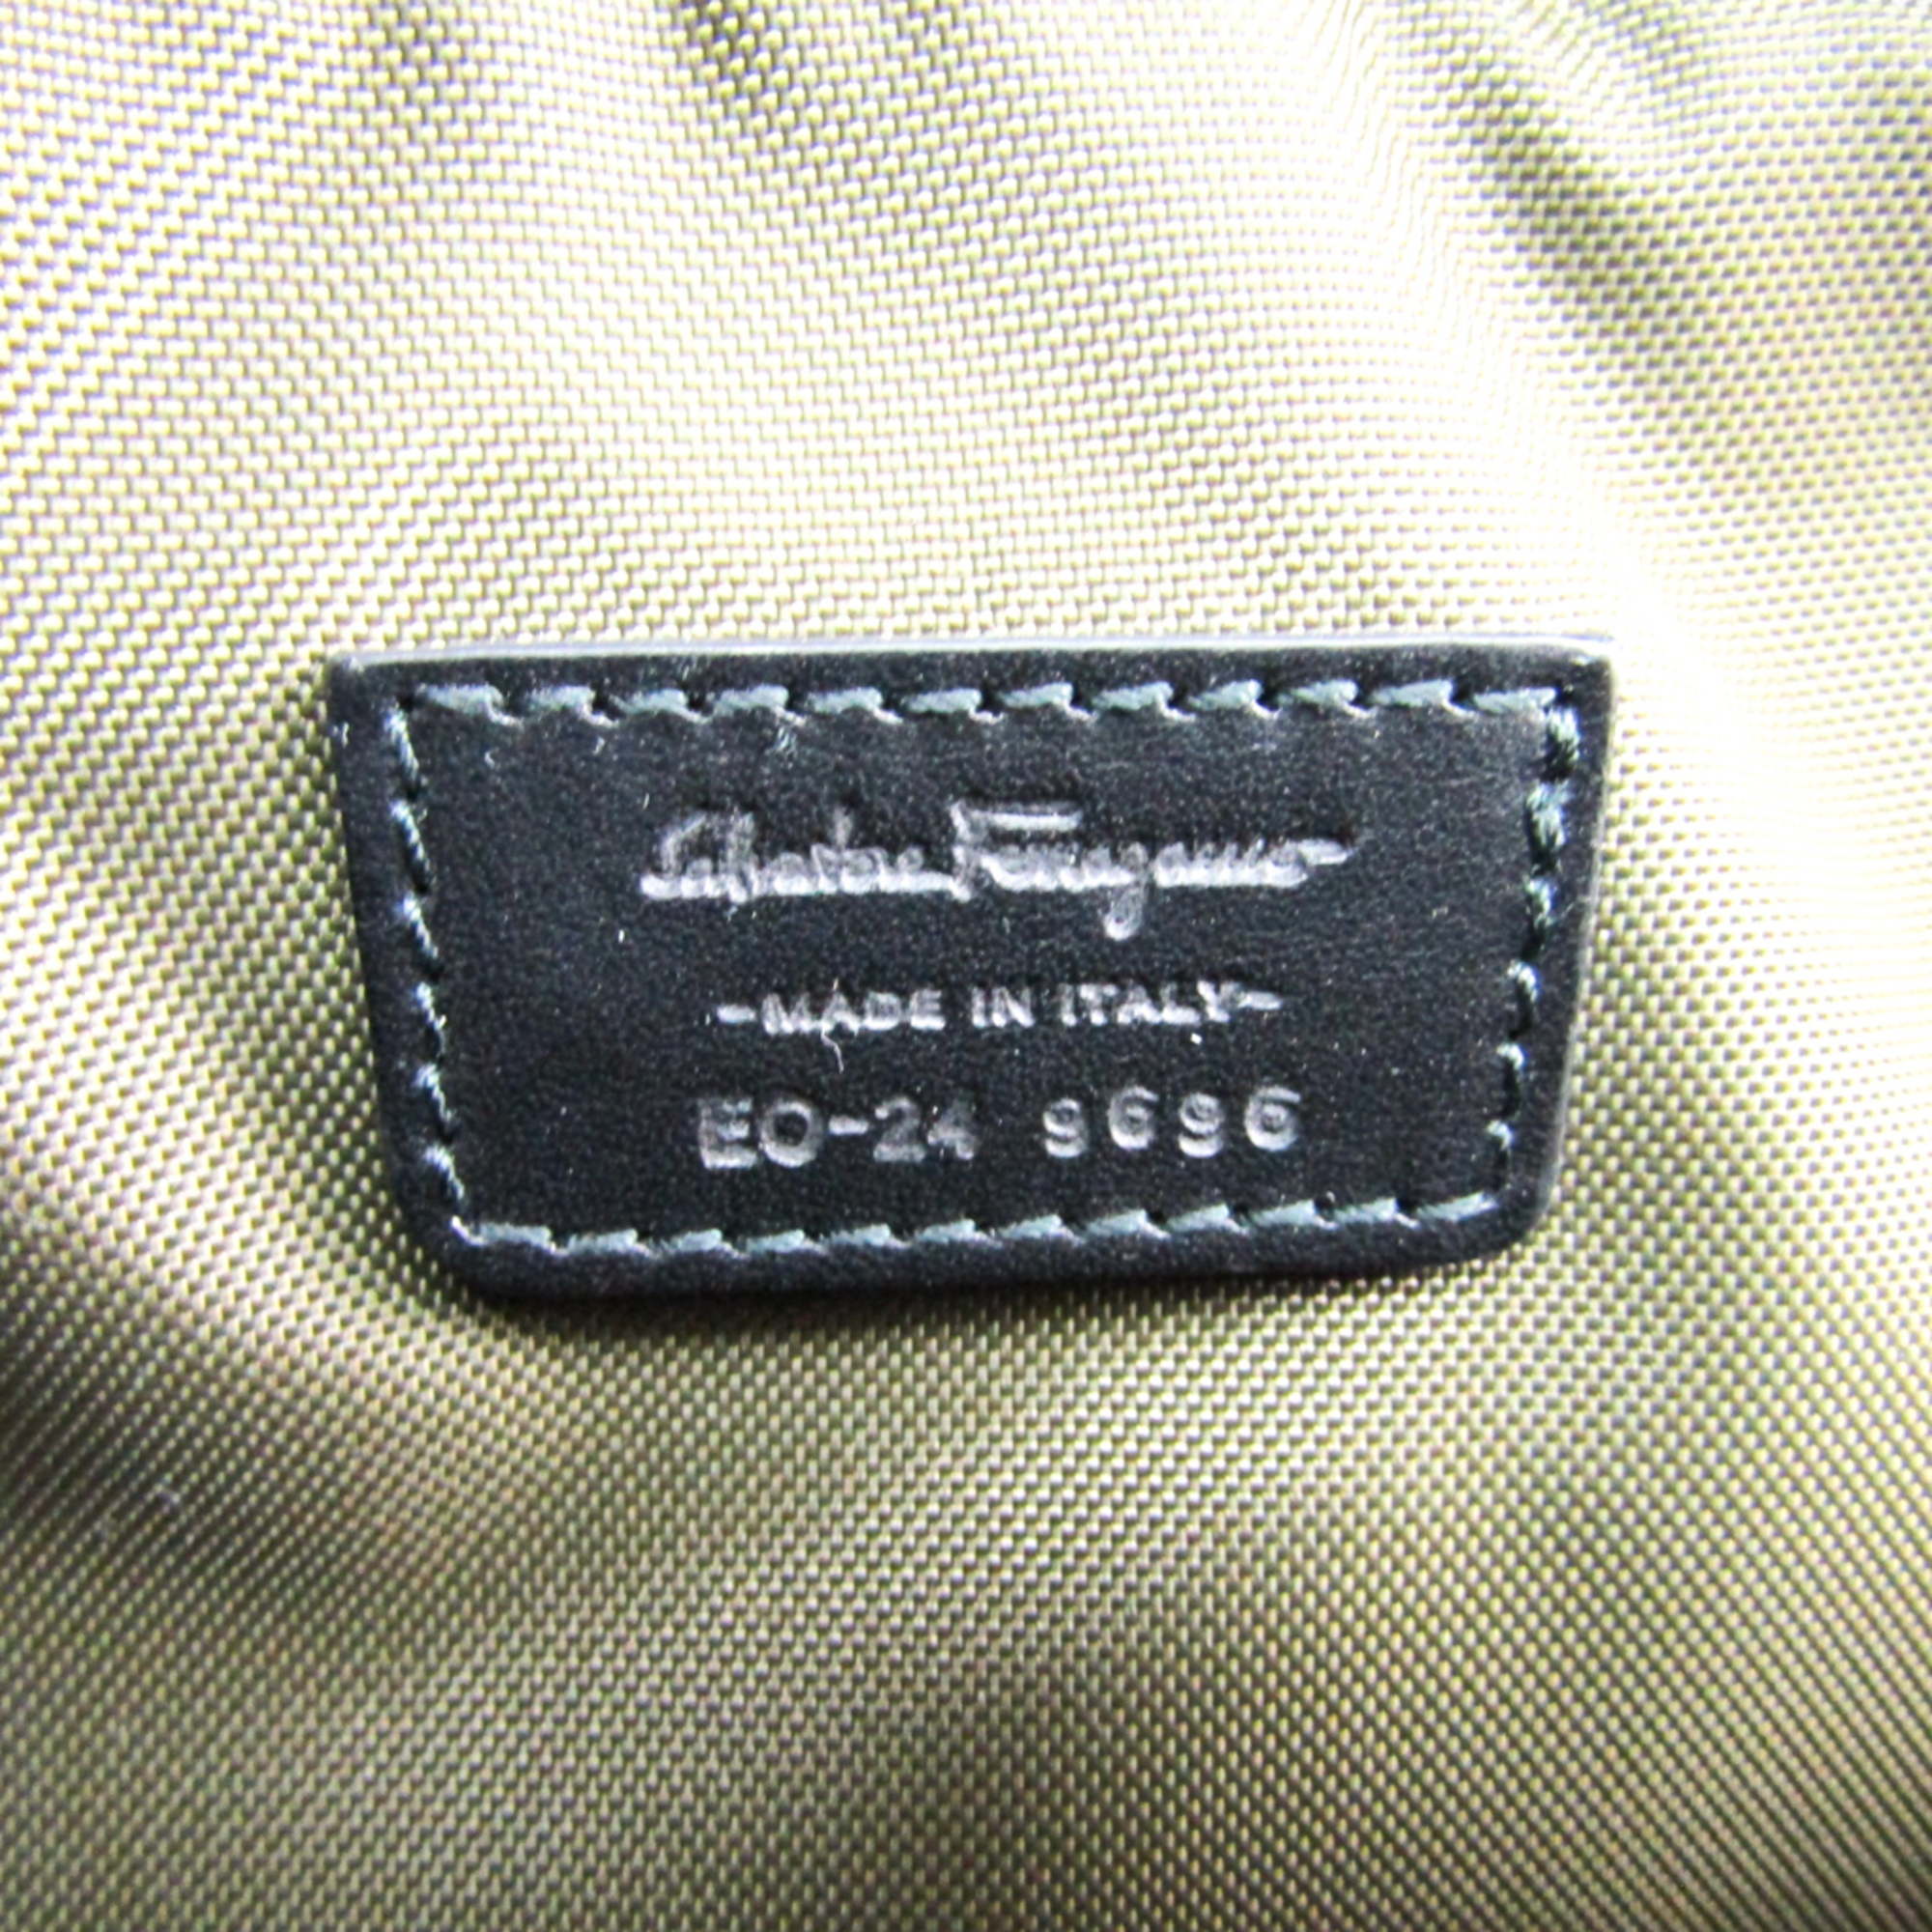 Salvatore Ferragamo 24 9696 Men's Leather Clutch Bag Black